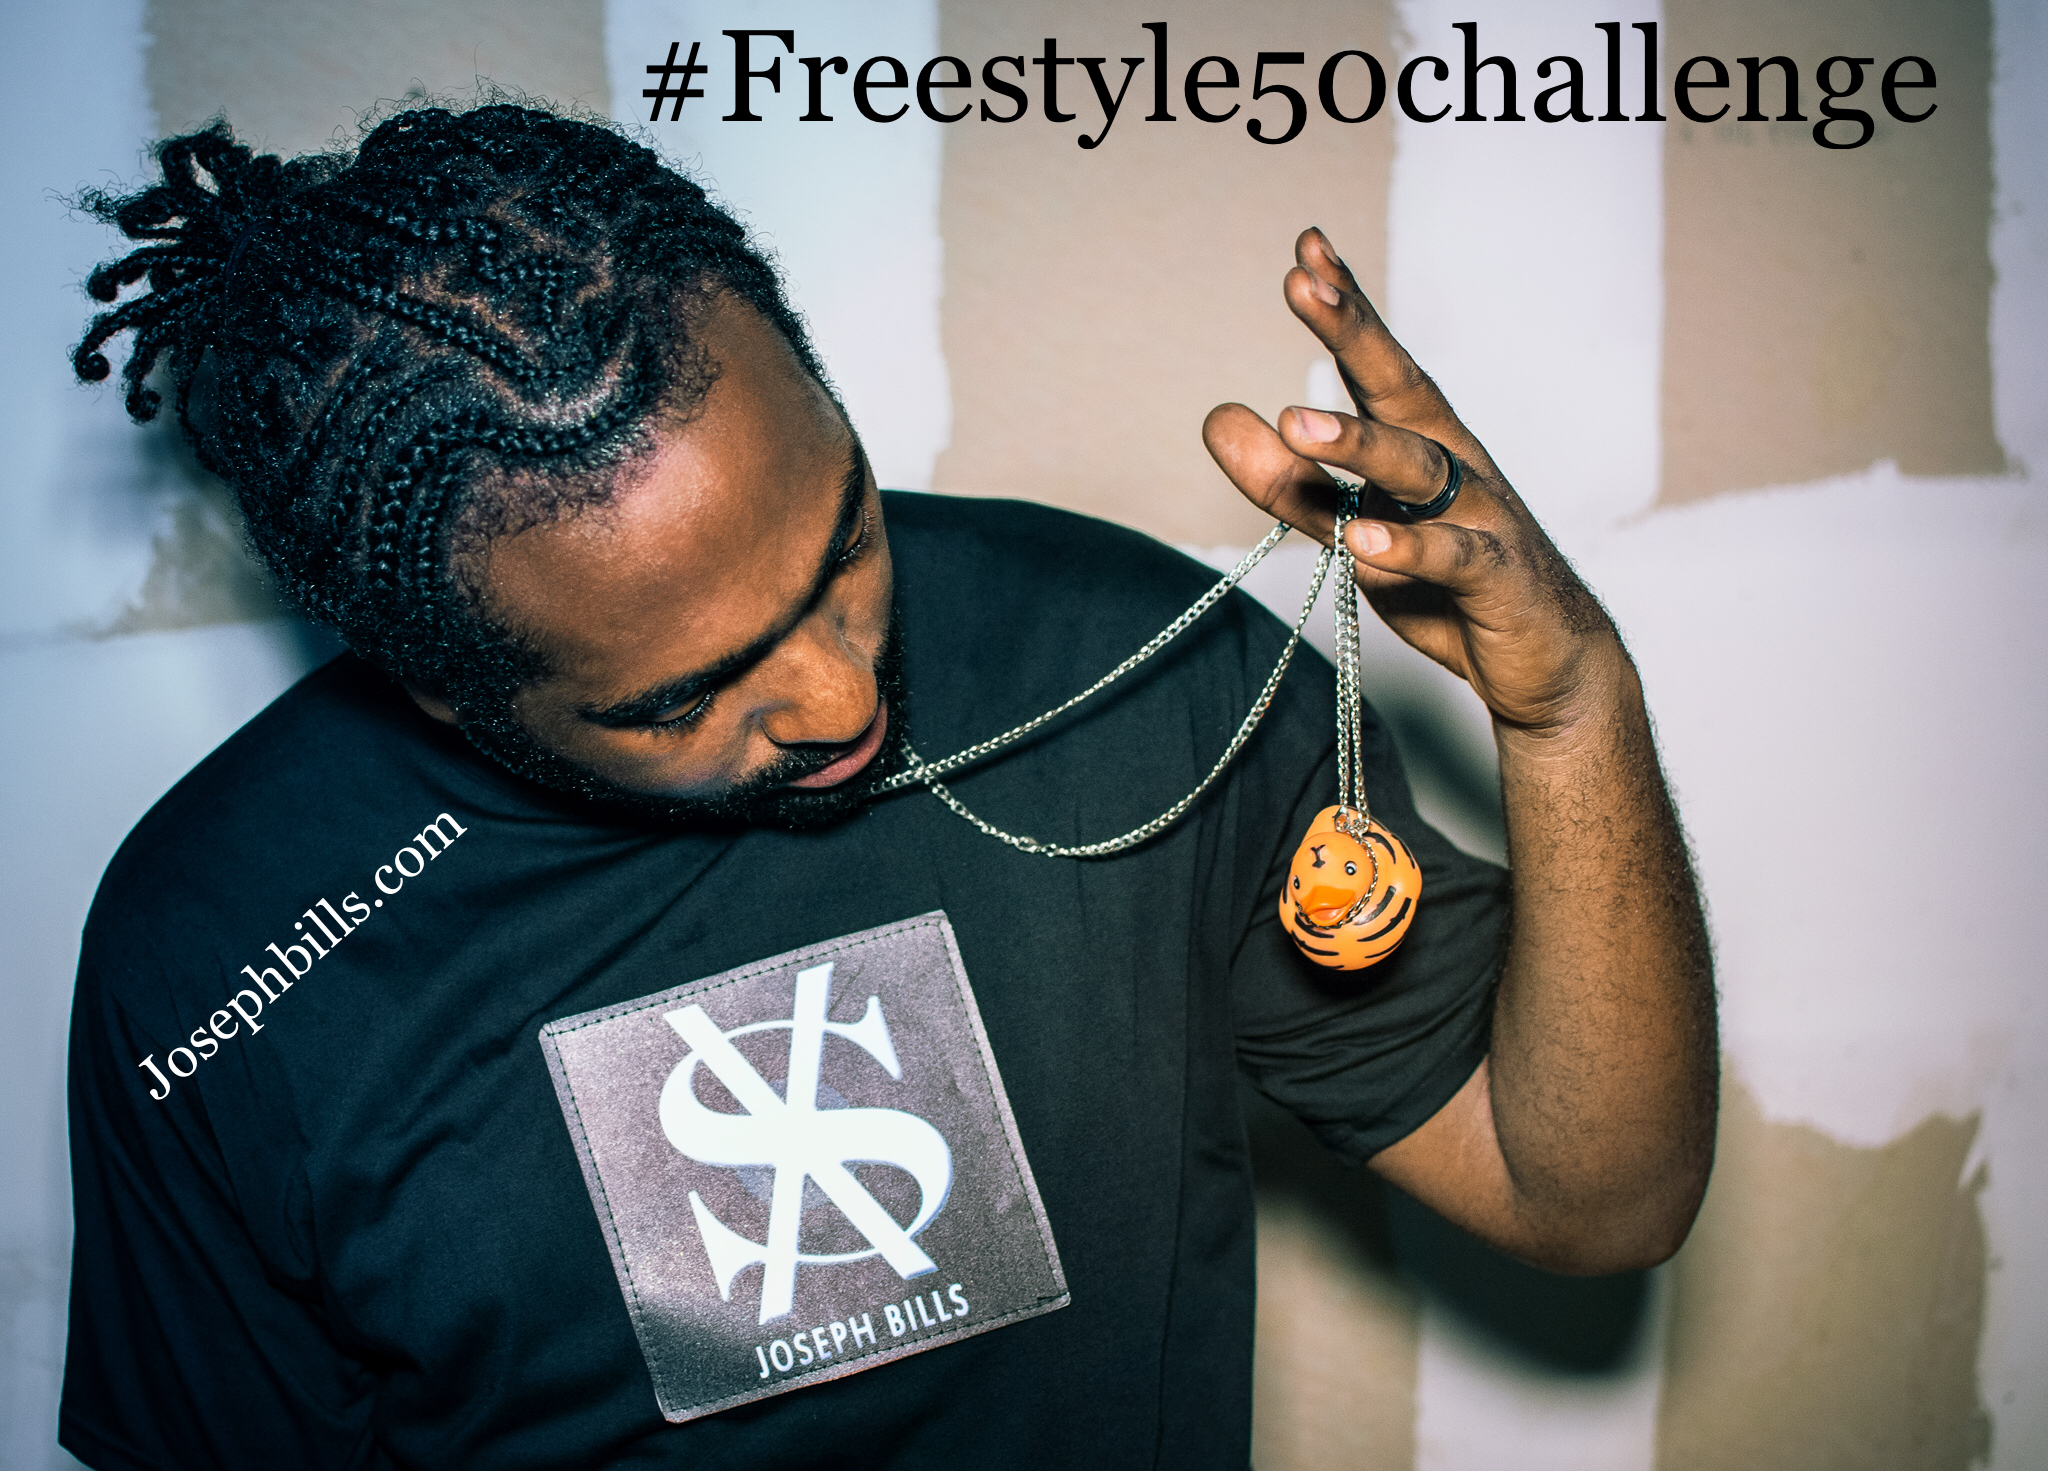 New Video: Joseph Bills – 50 Challenge Freestyle | @josephbills